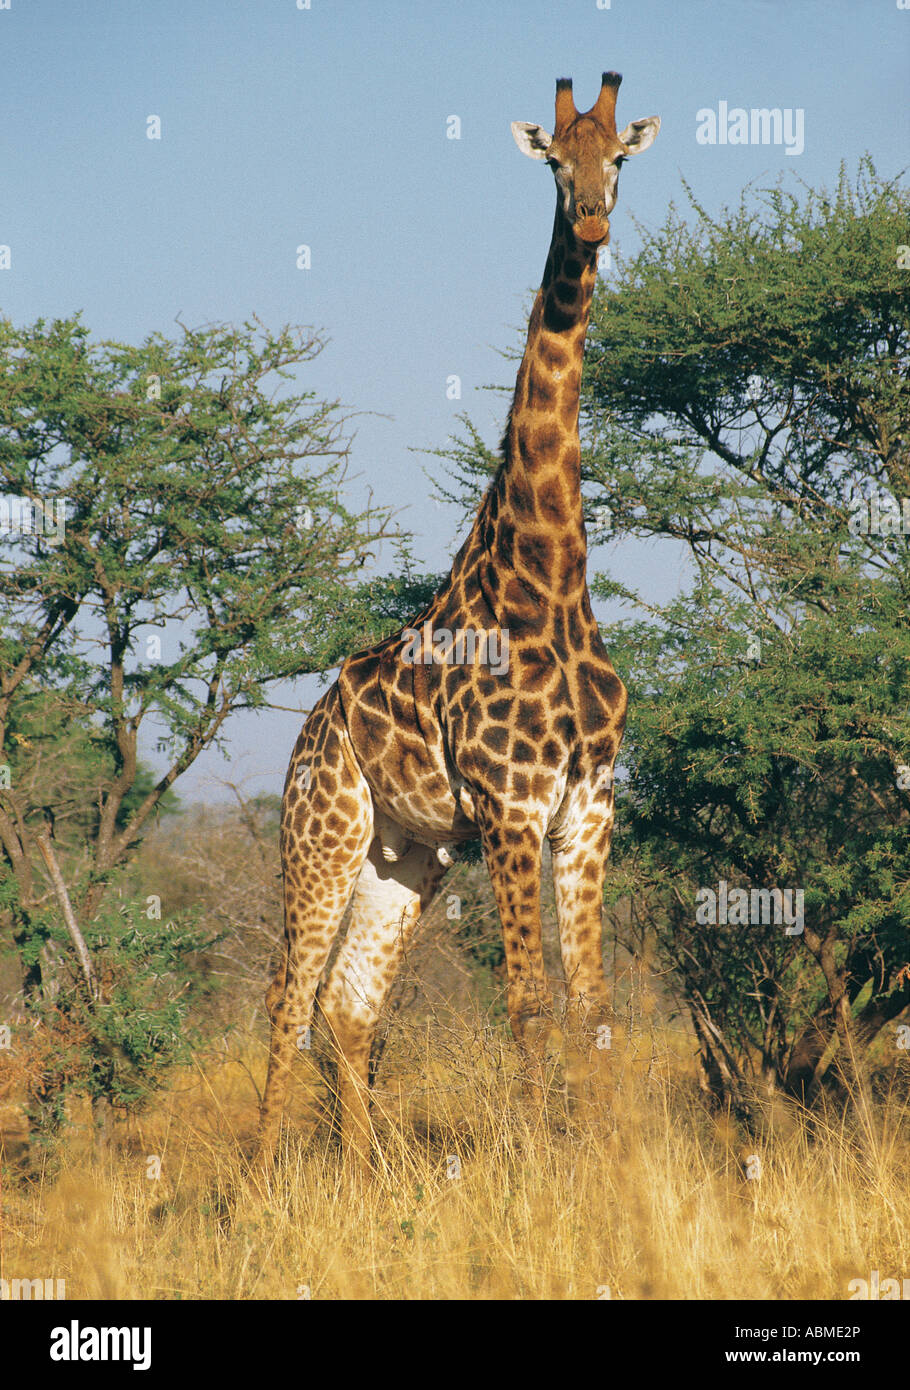 Girafe commun de l'Afrique du Sud Parc National Kruger Banque D'Images